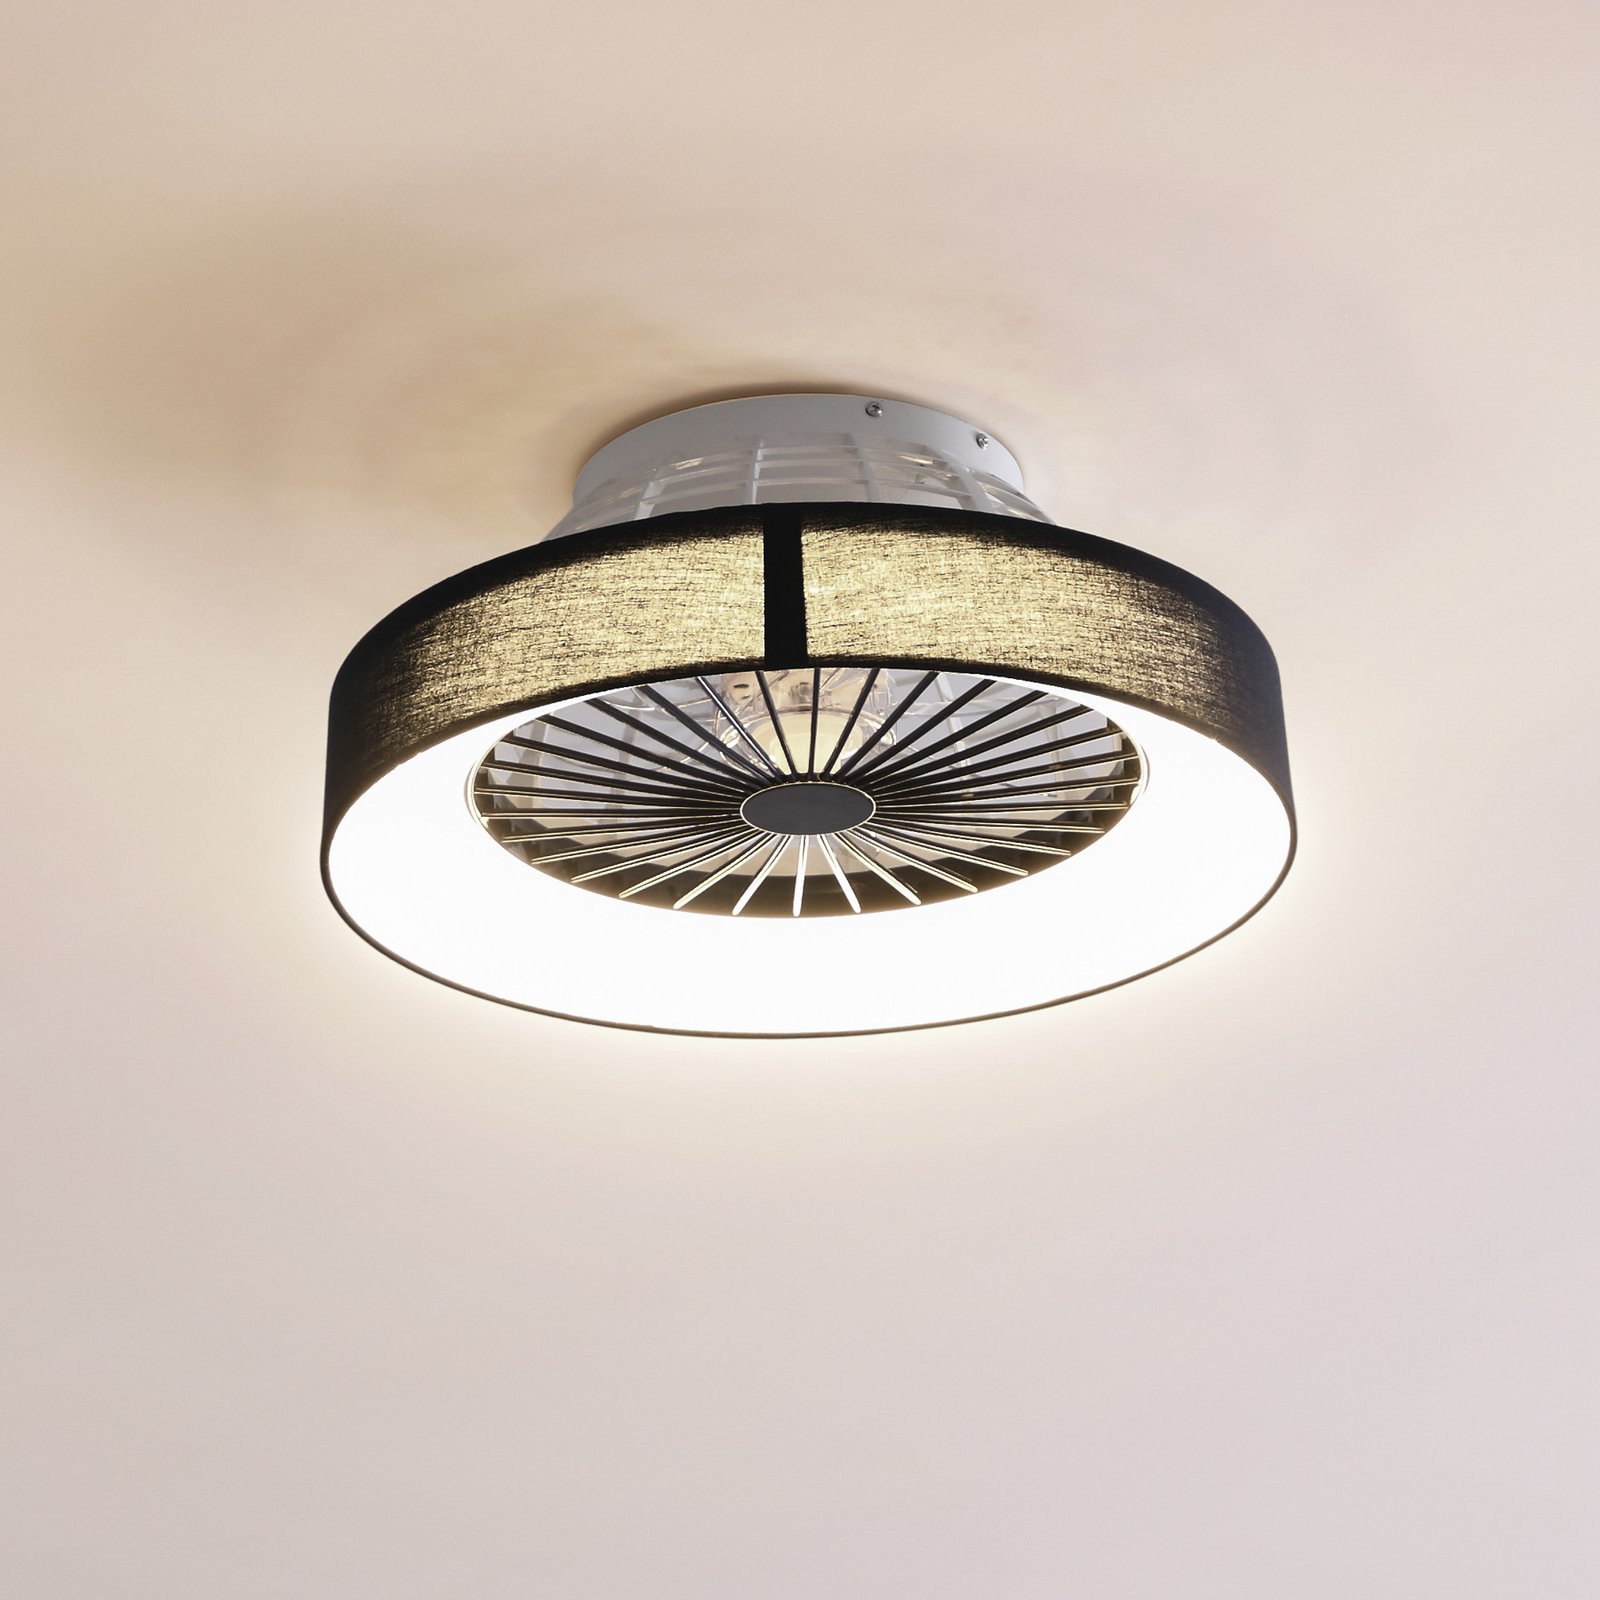 Lindby LED-Deckenventilator Mace, schwarz, leise, Ø 47 cm